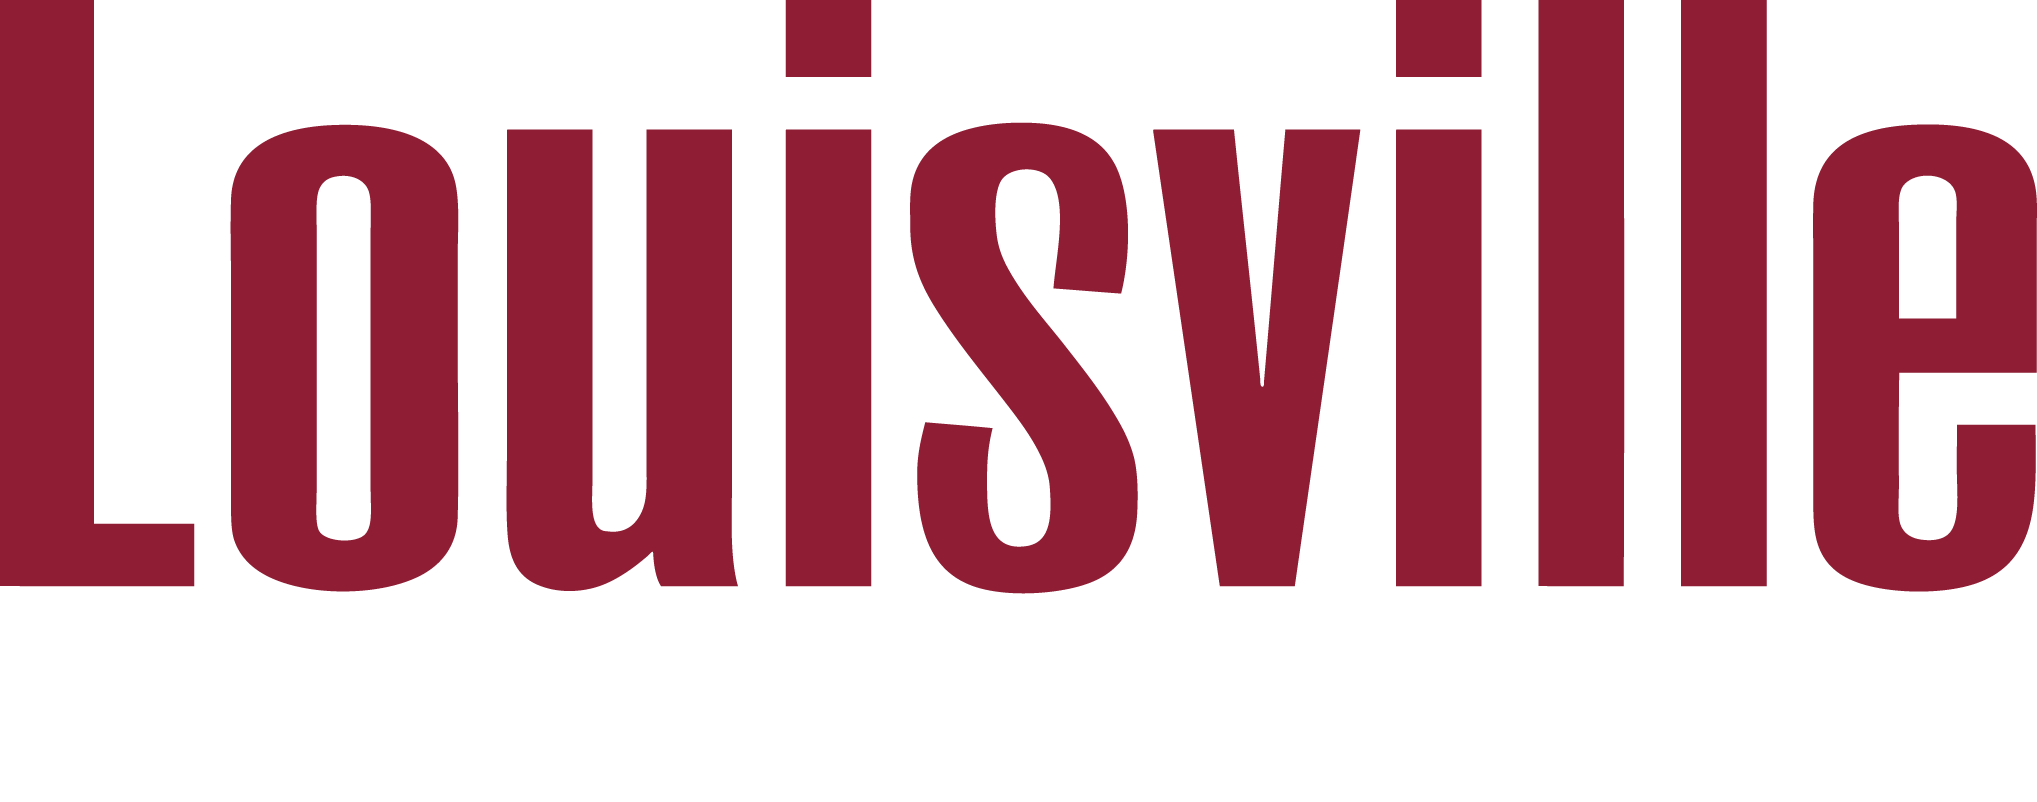 Louisville Magazine Logo - Louisville Tickets. Louisville Magazine Events